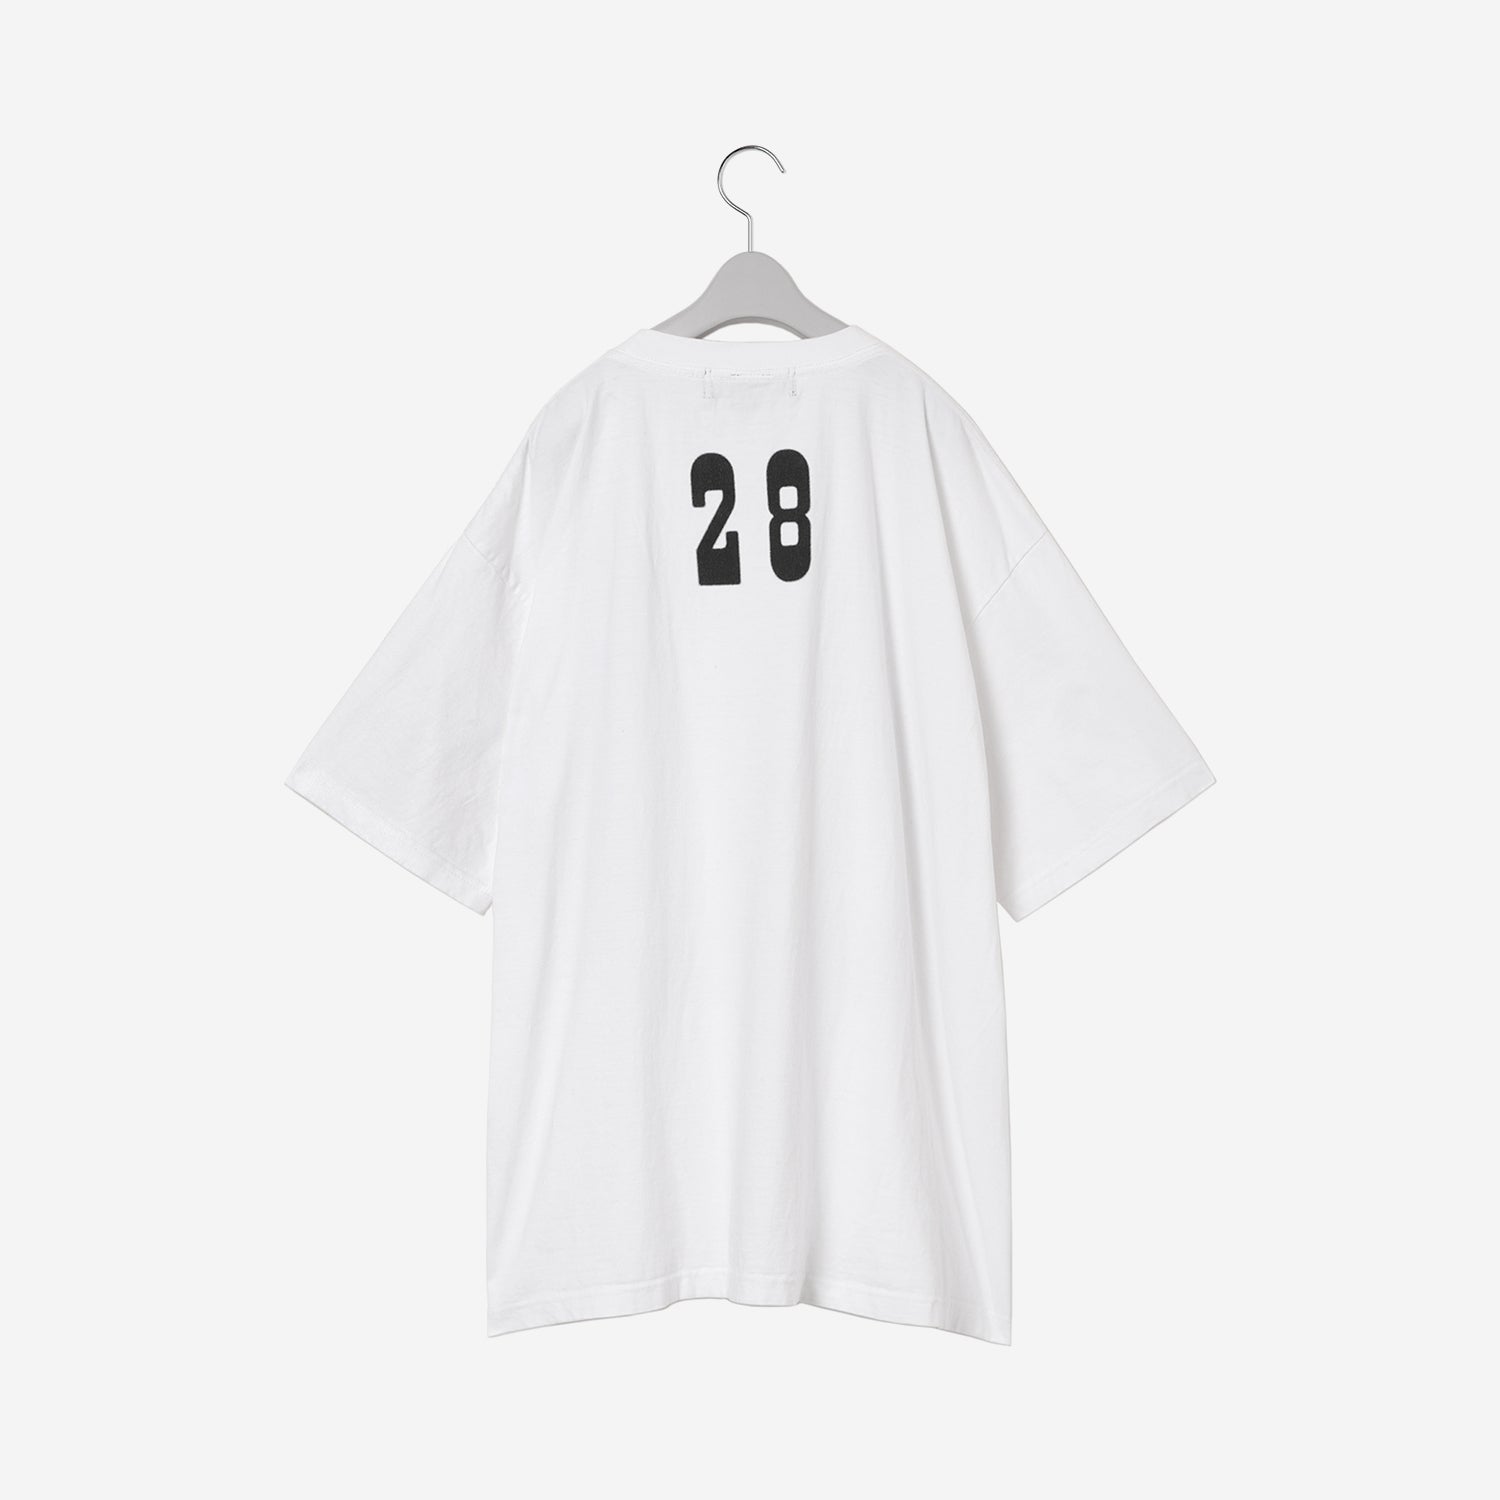 Printed T-shirt / white